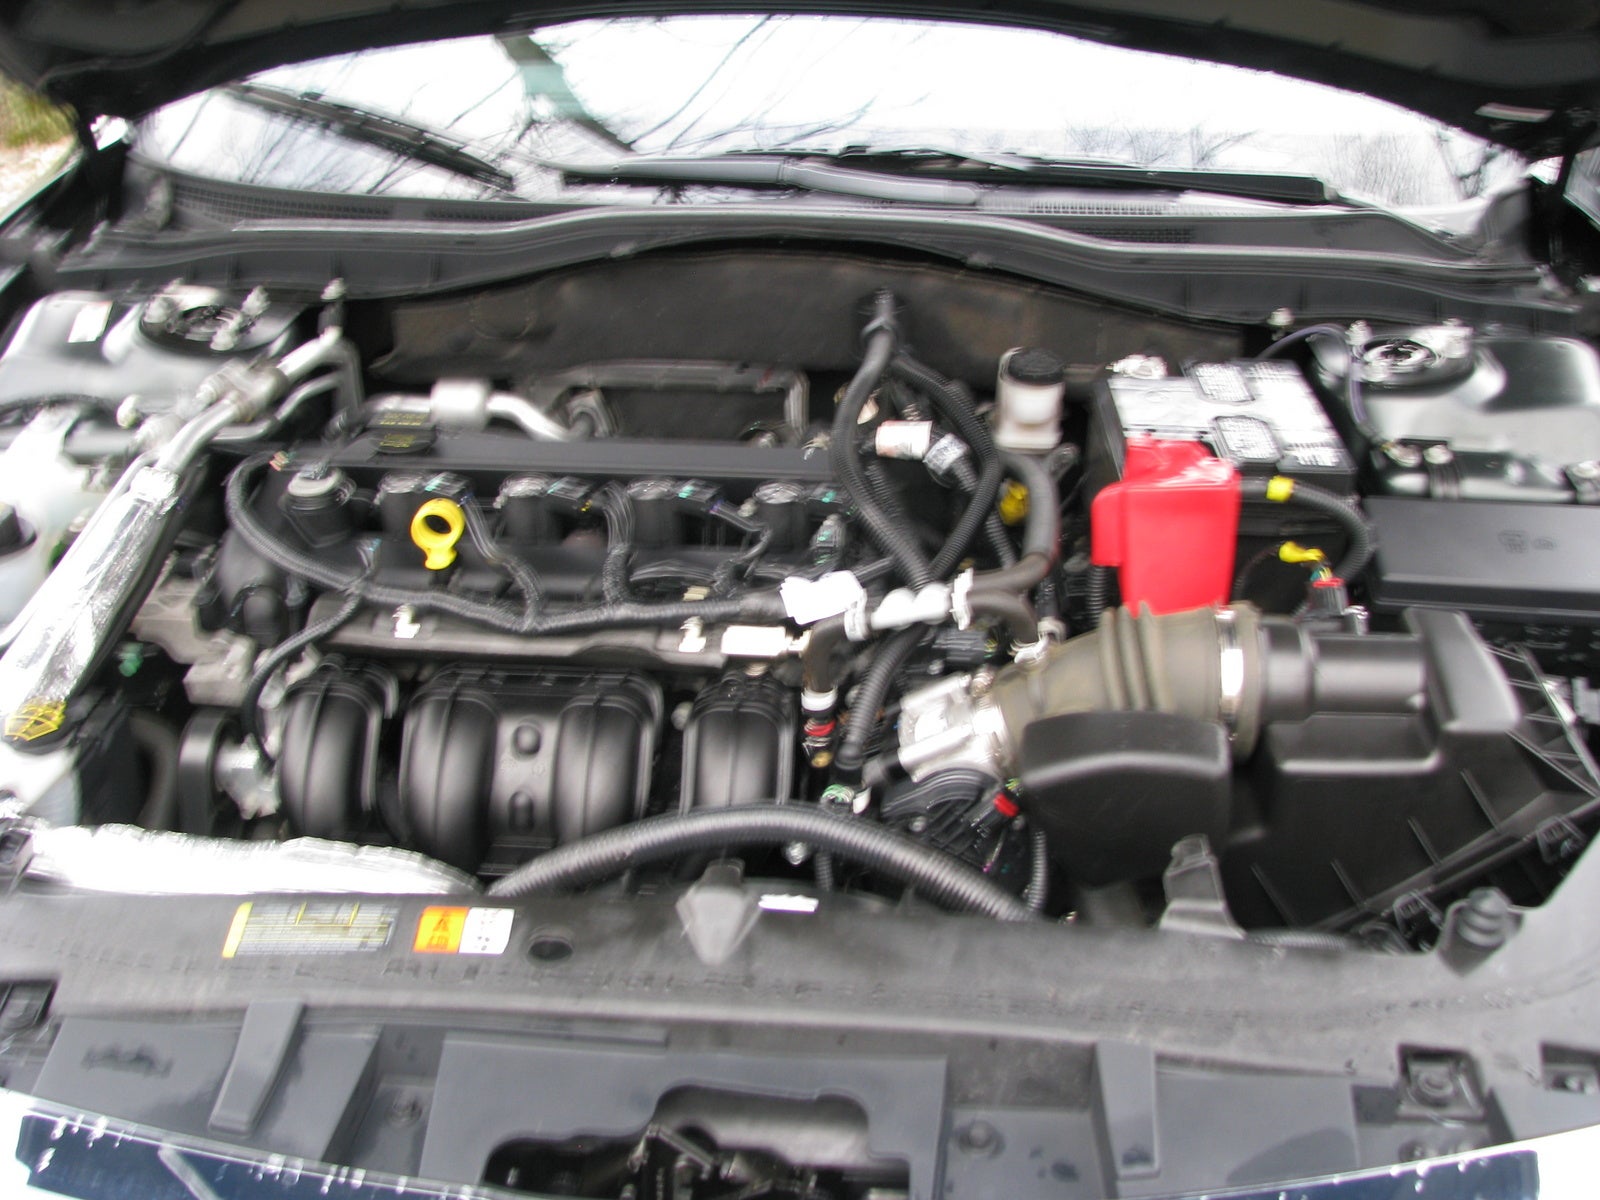 2010 Ford fusion manual transmission #3